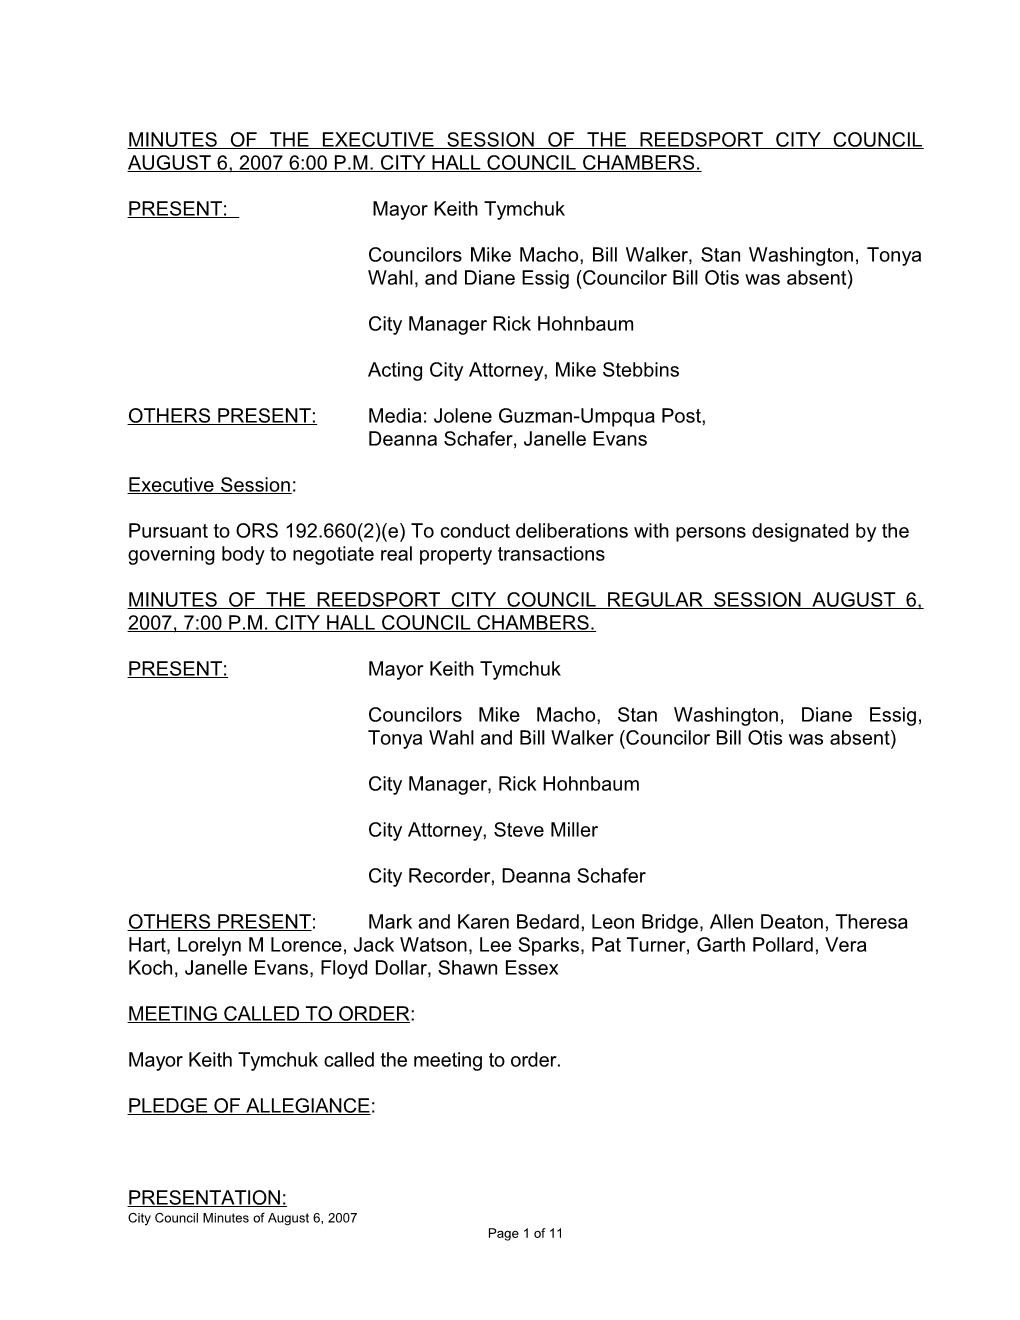 Minutes of the Reedsport City Council Regular Session April 5, 2004, 7:00 P s1